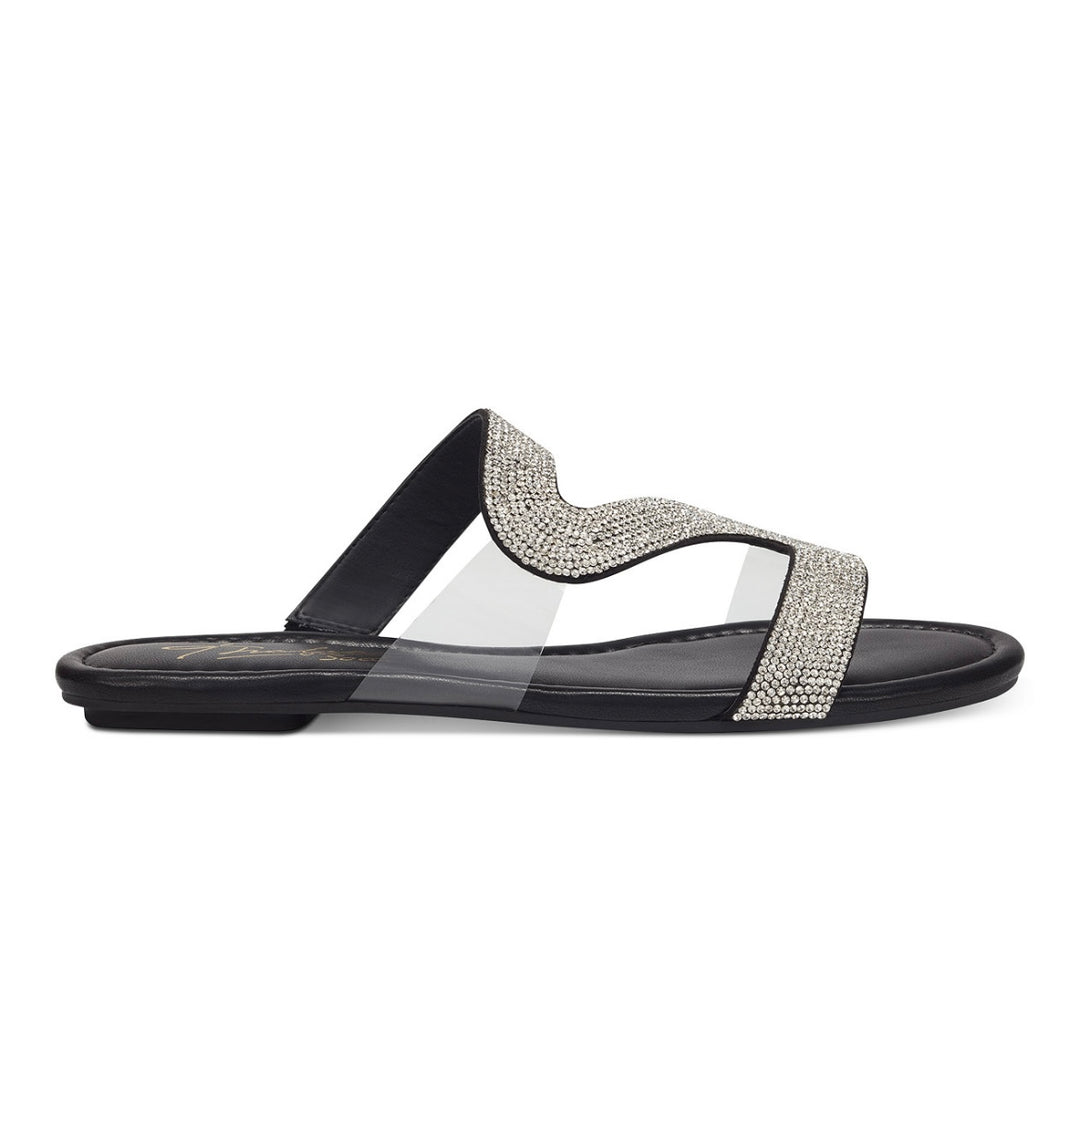 Thalia Sodi Women's Bianca Faux Leather Rhinestone Slide Sandals Black Size 8.5M